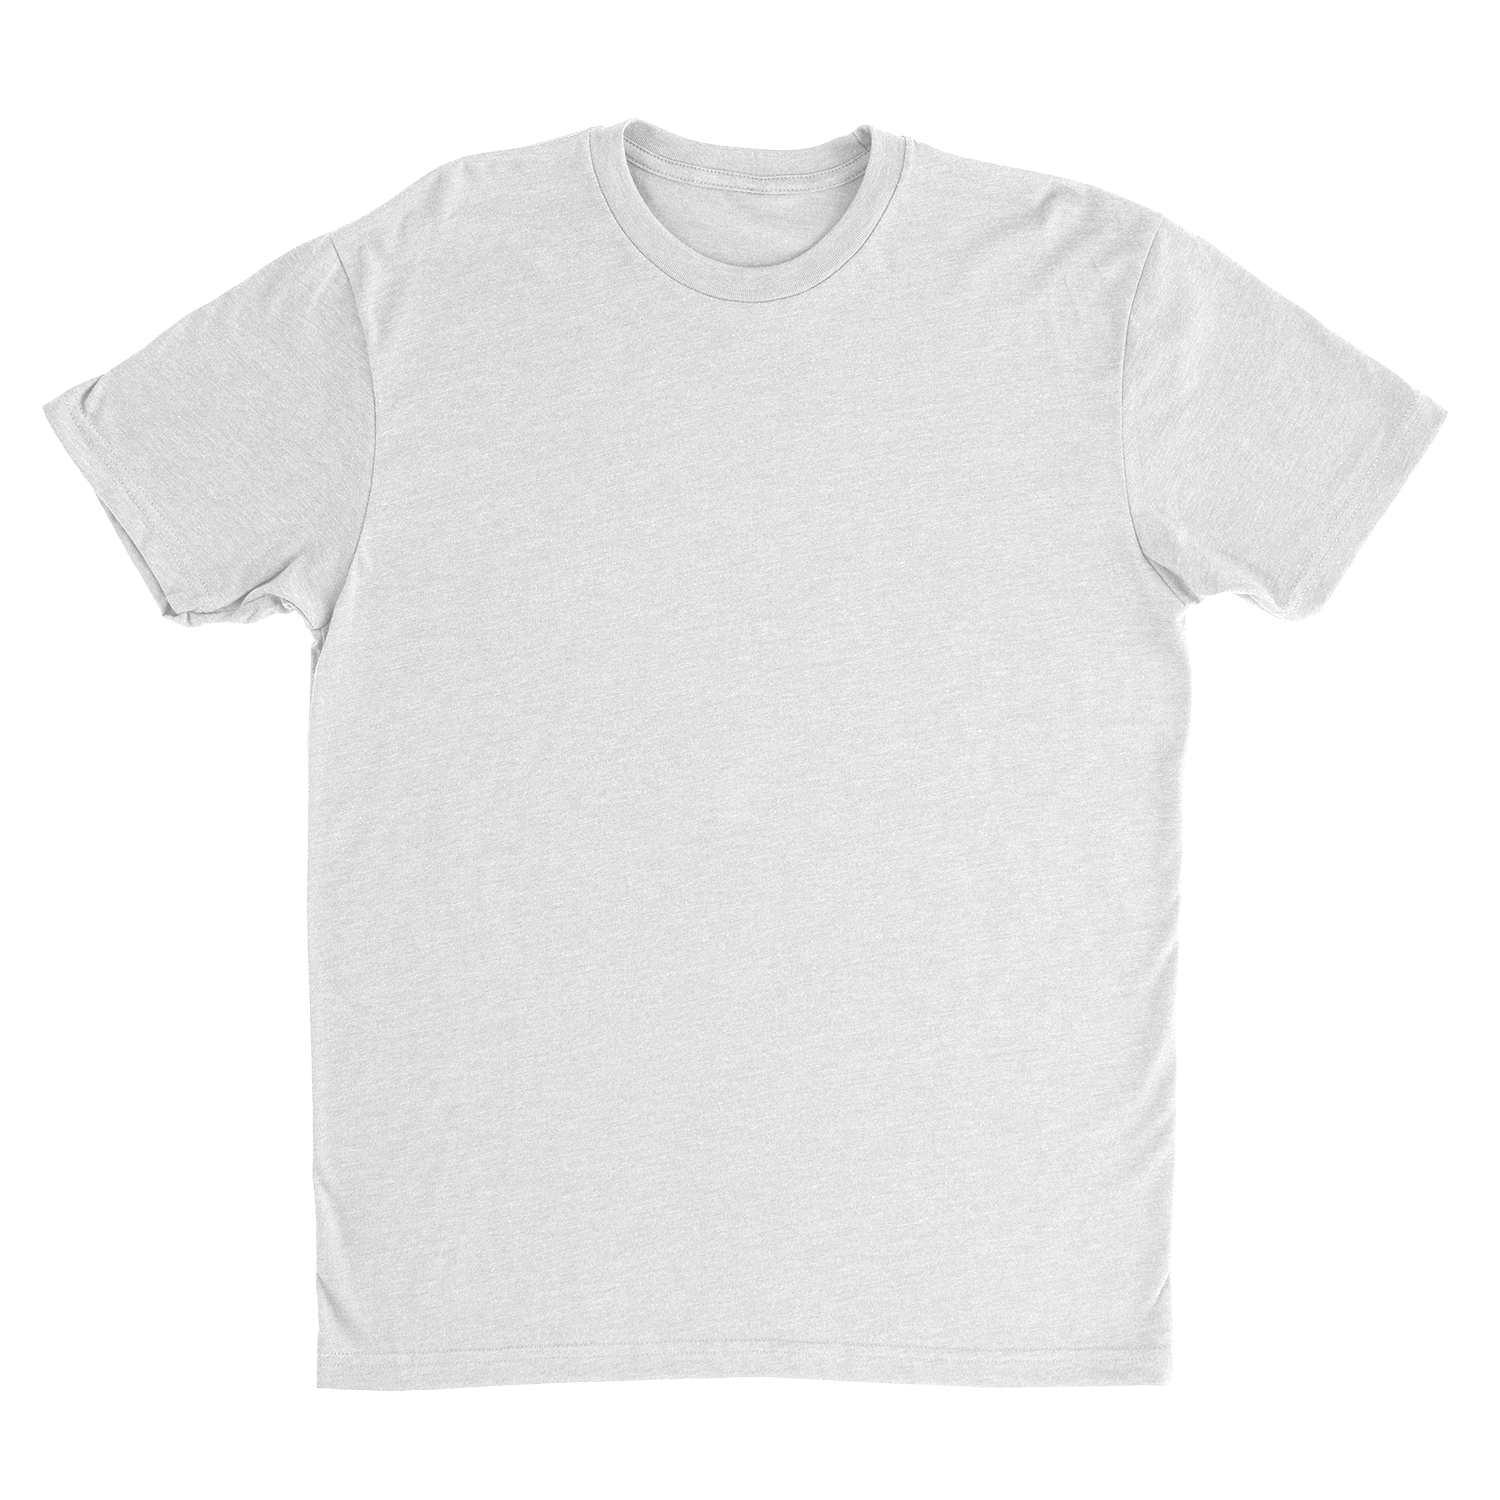 Download Buy Next Level T Shirt Mockup Cheap Online